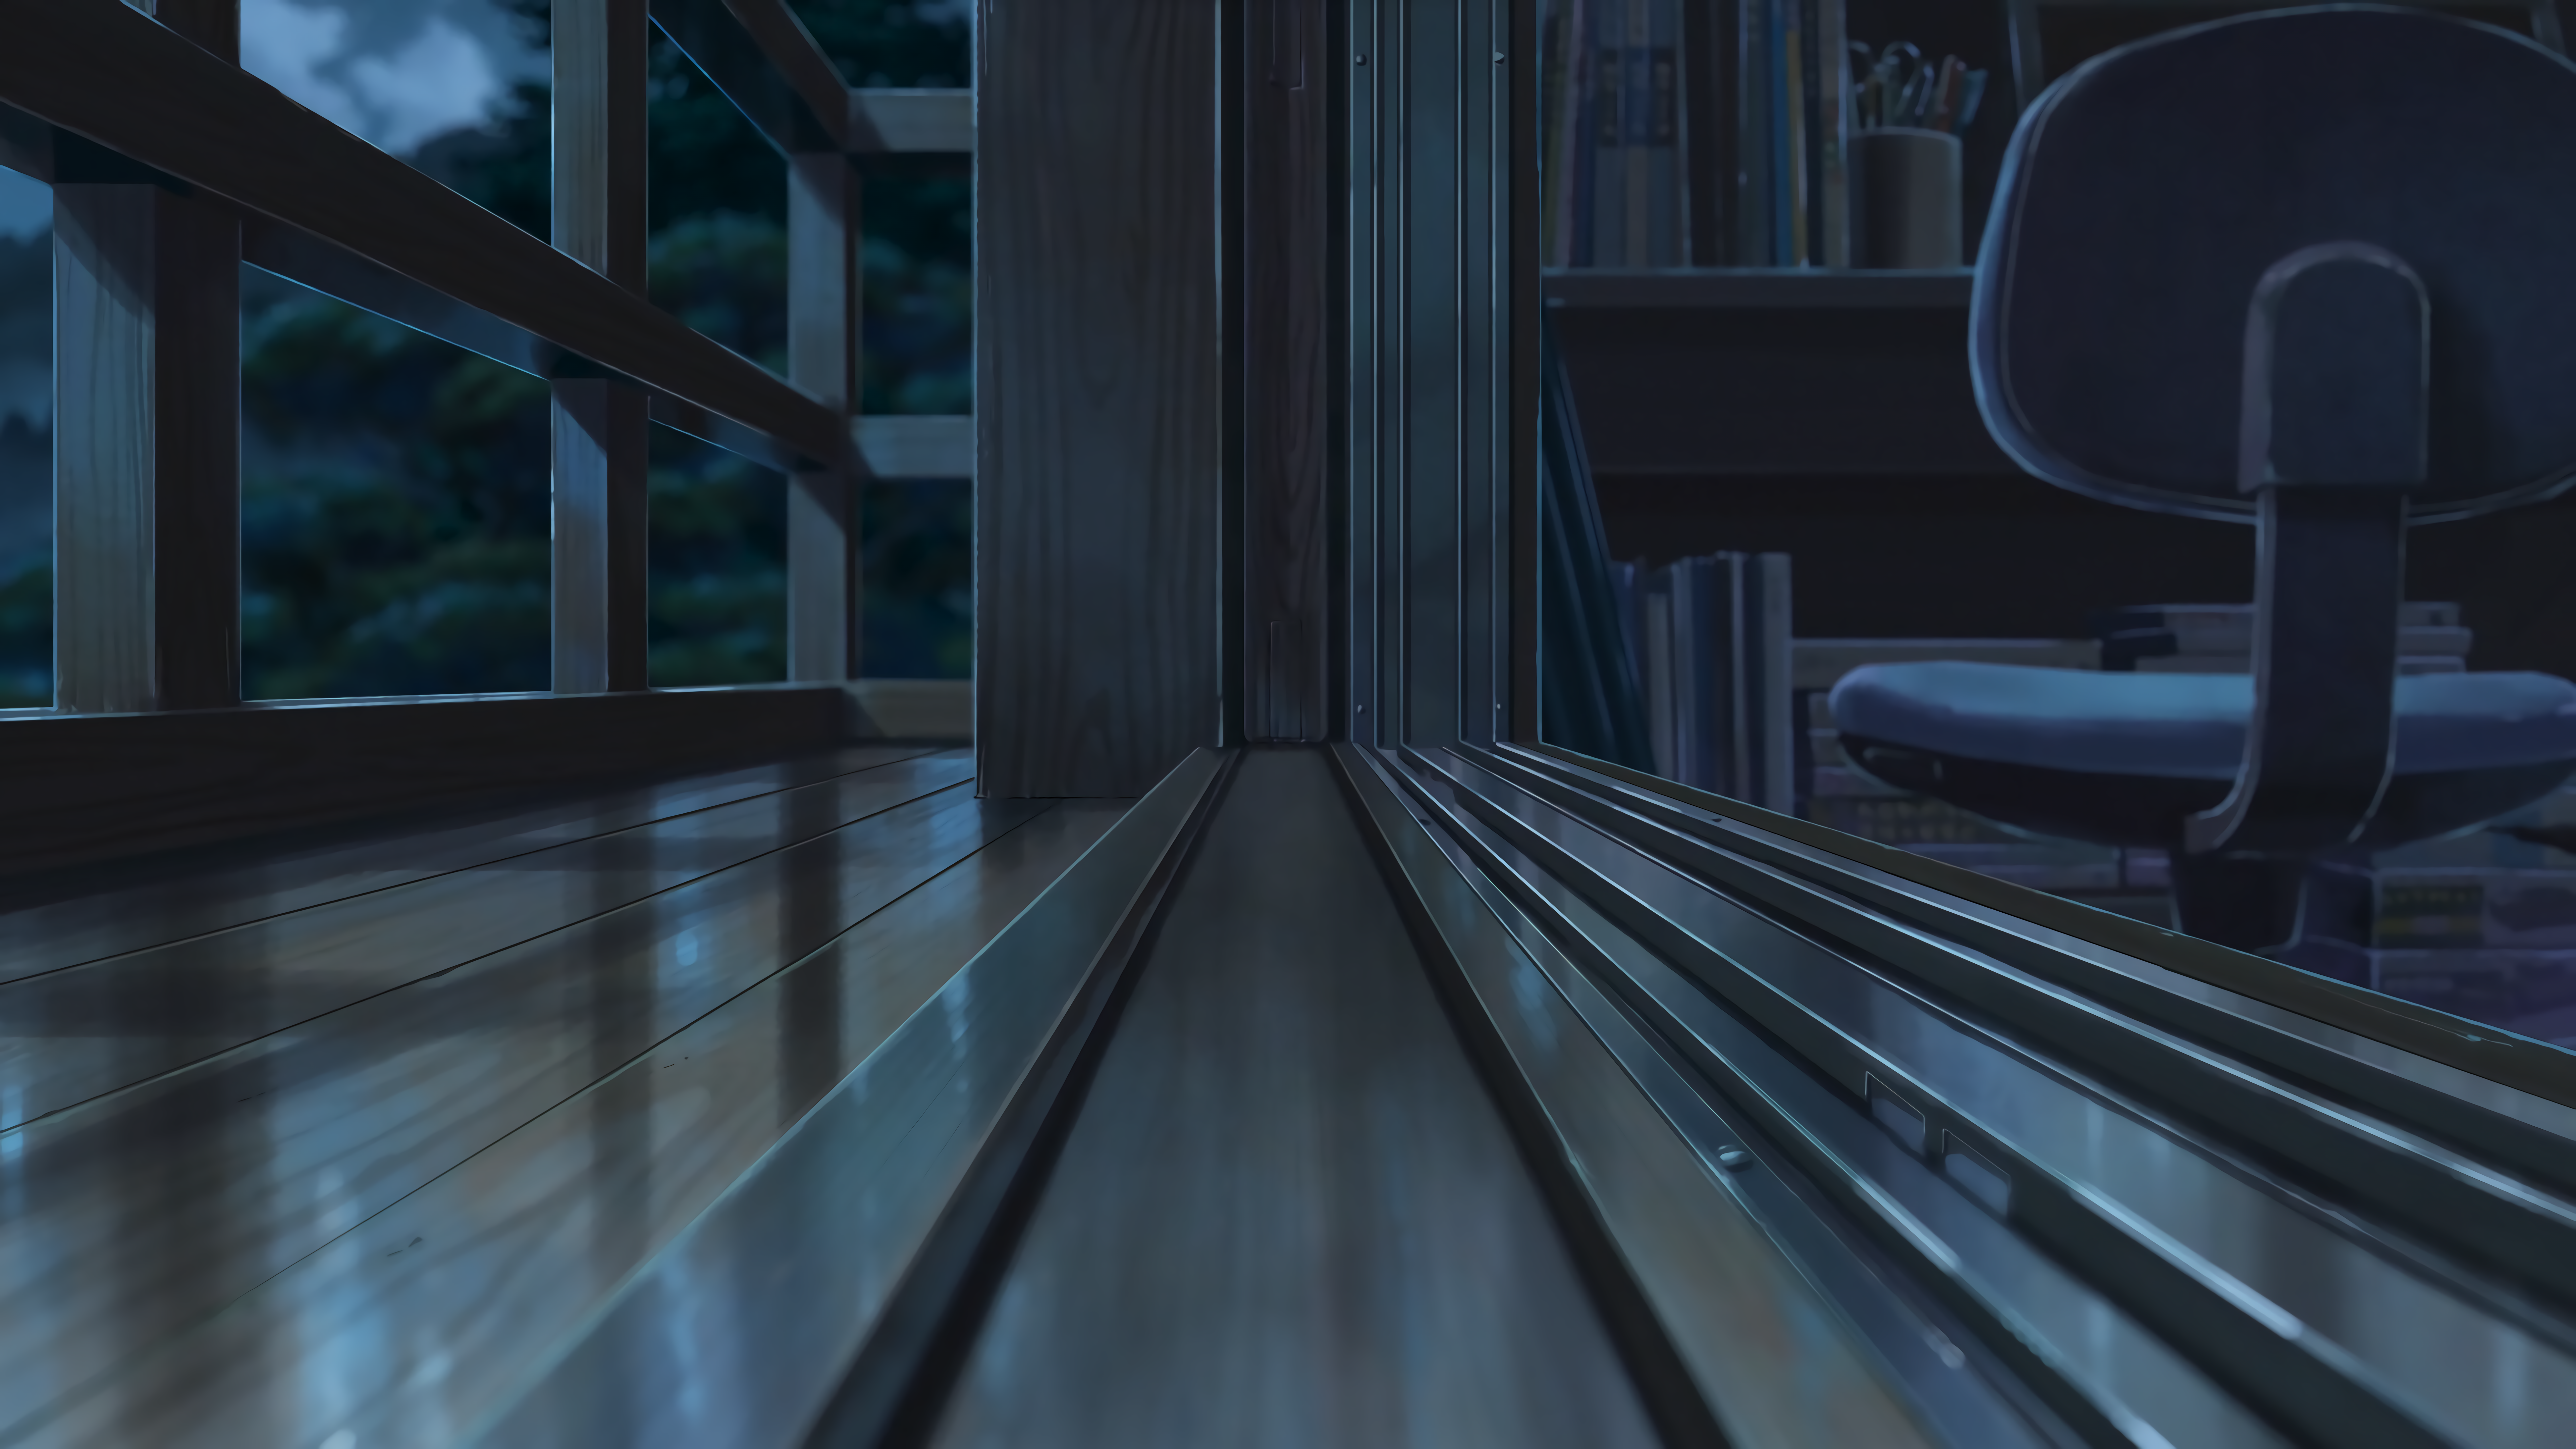 Dark Background Doorways Night Line Art Desk Balcony Anime Wood Swivel Chair Bookcase 7680x4320